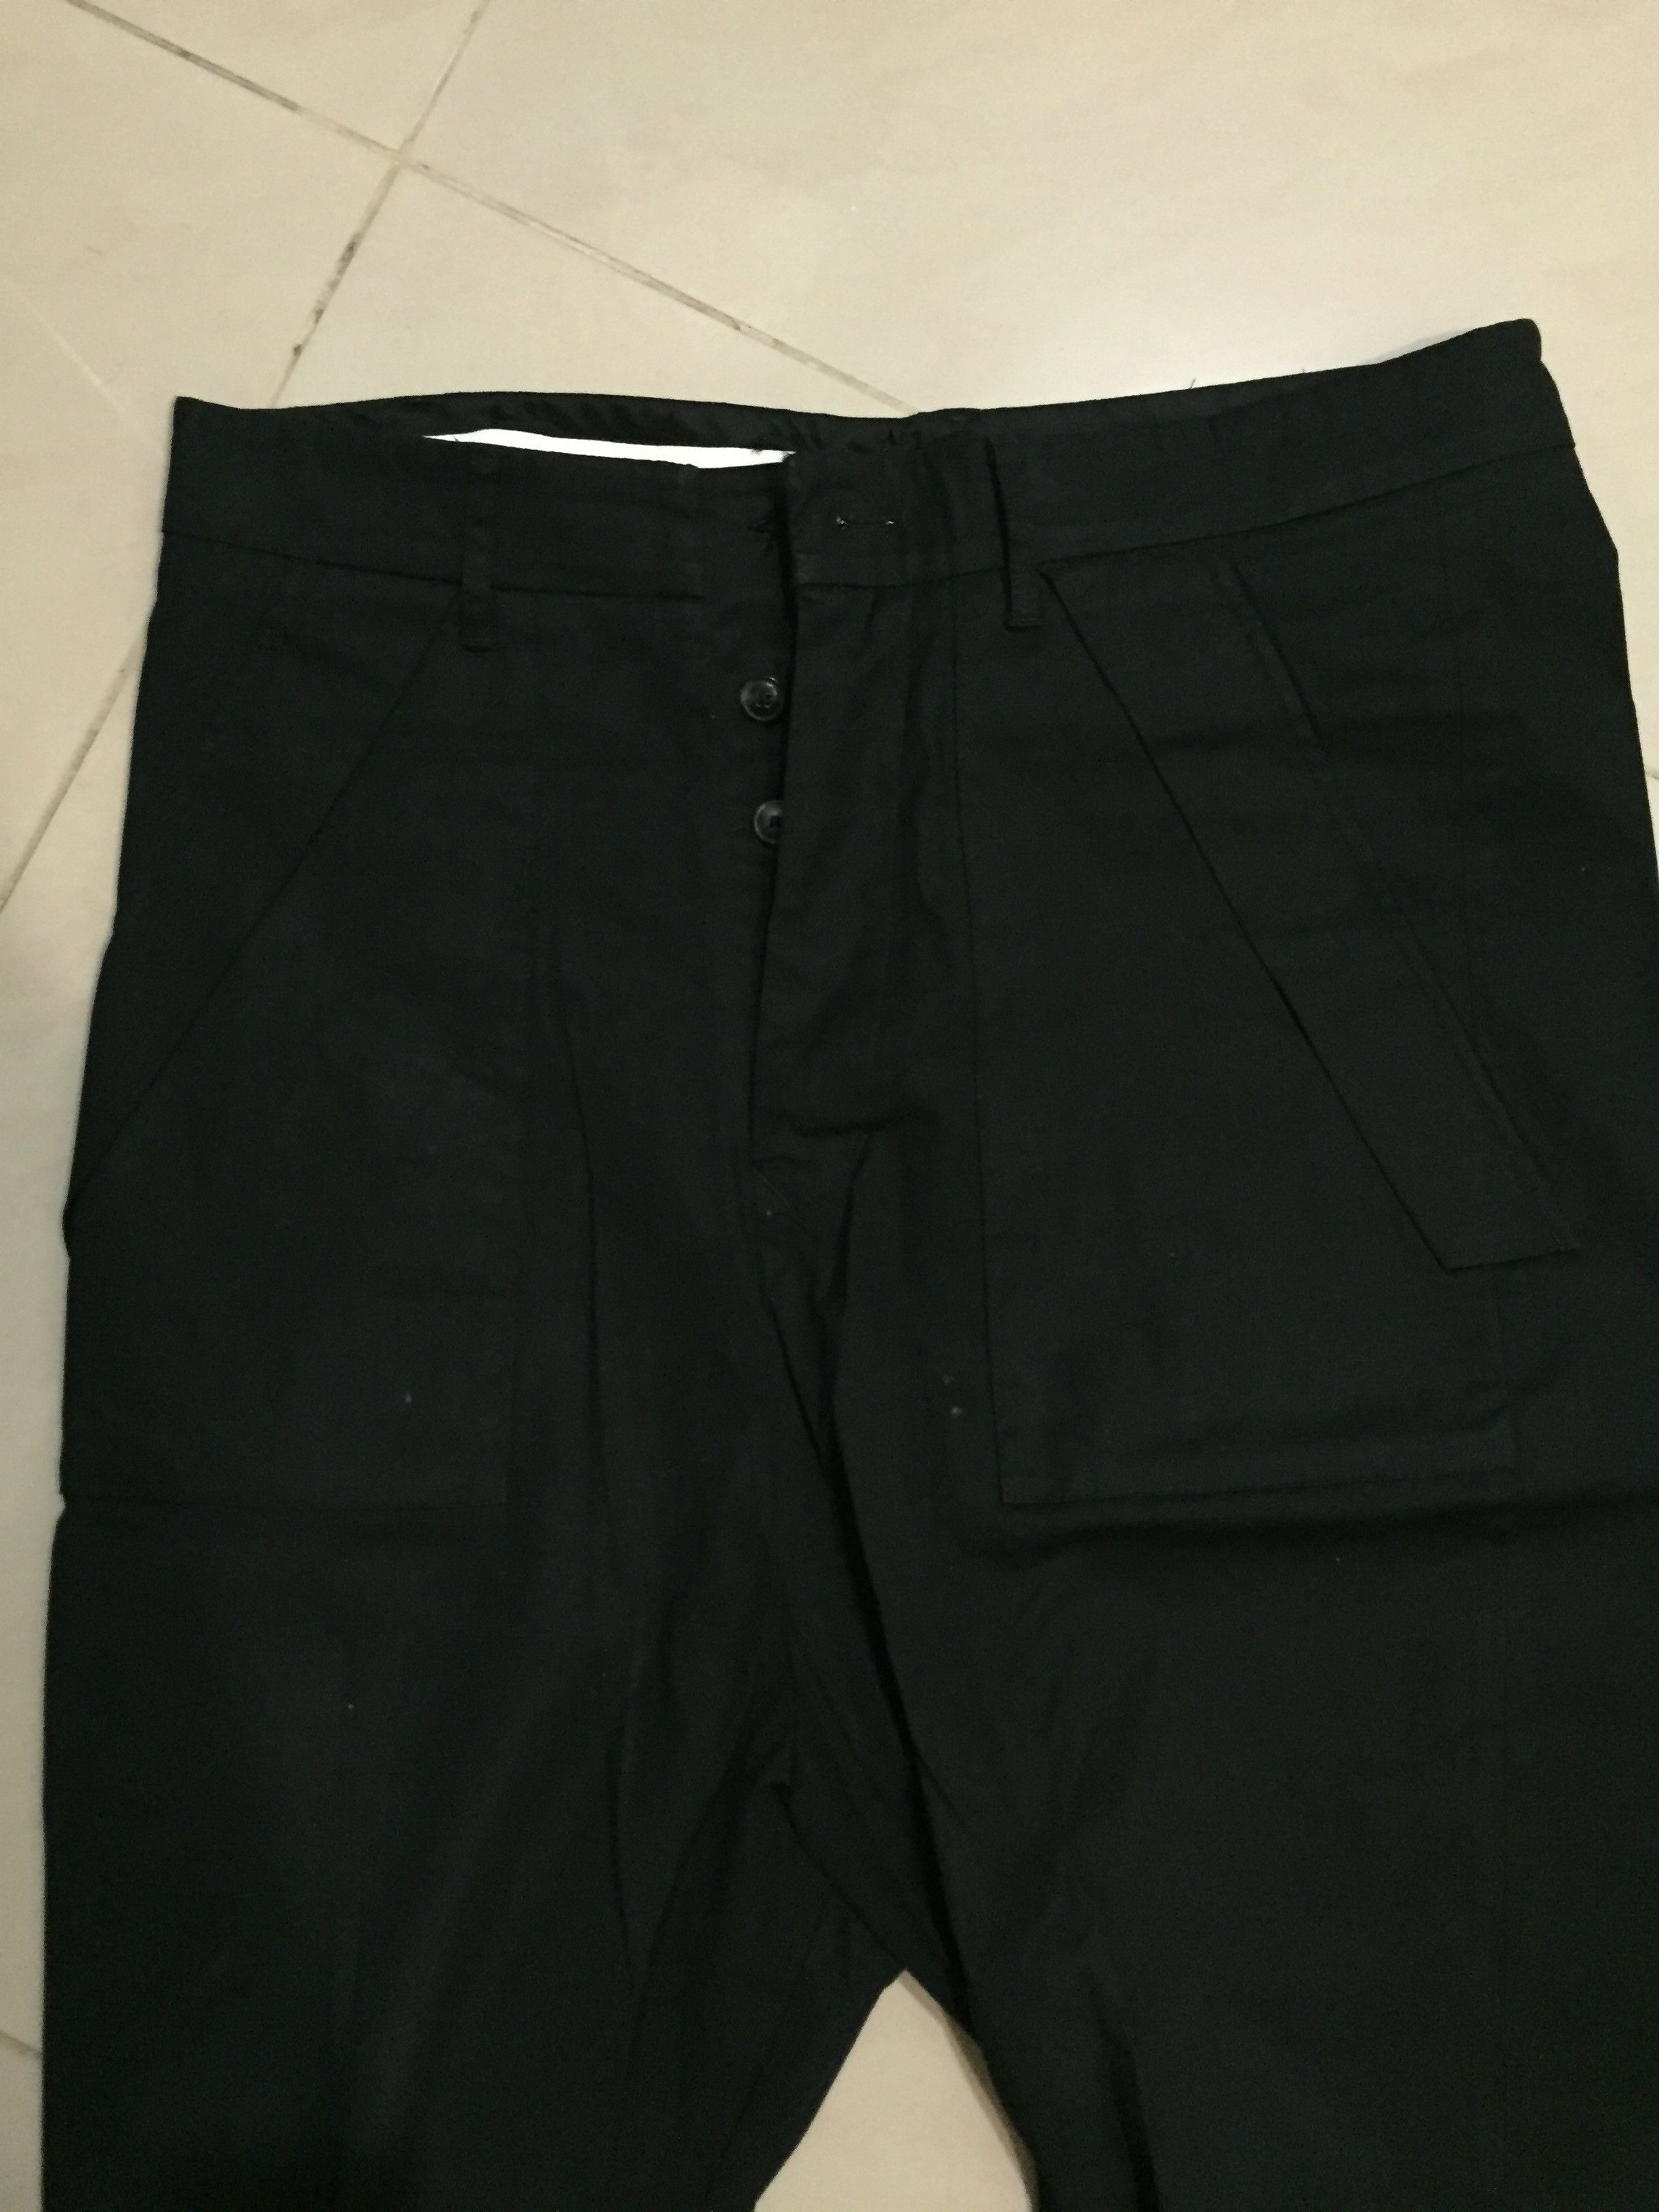 Rick Owens Drop crotch woven pants Size US 32 / EU 48 - 2 Preview